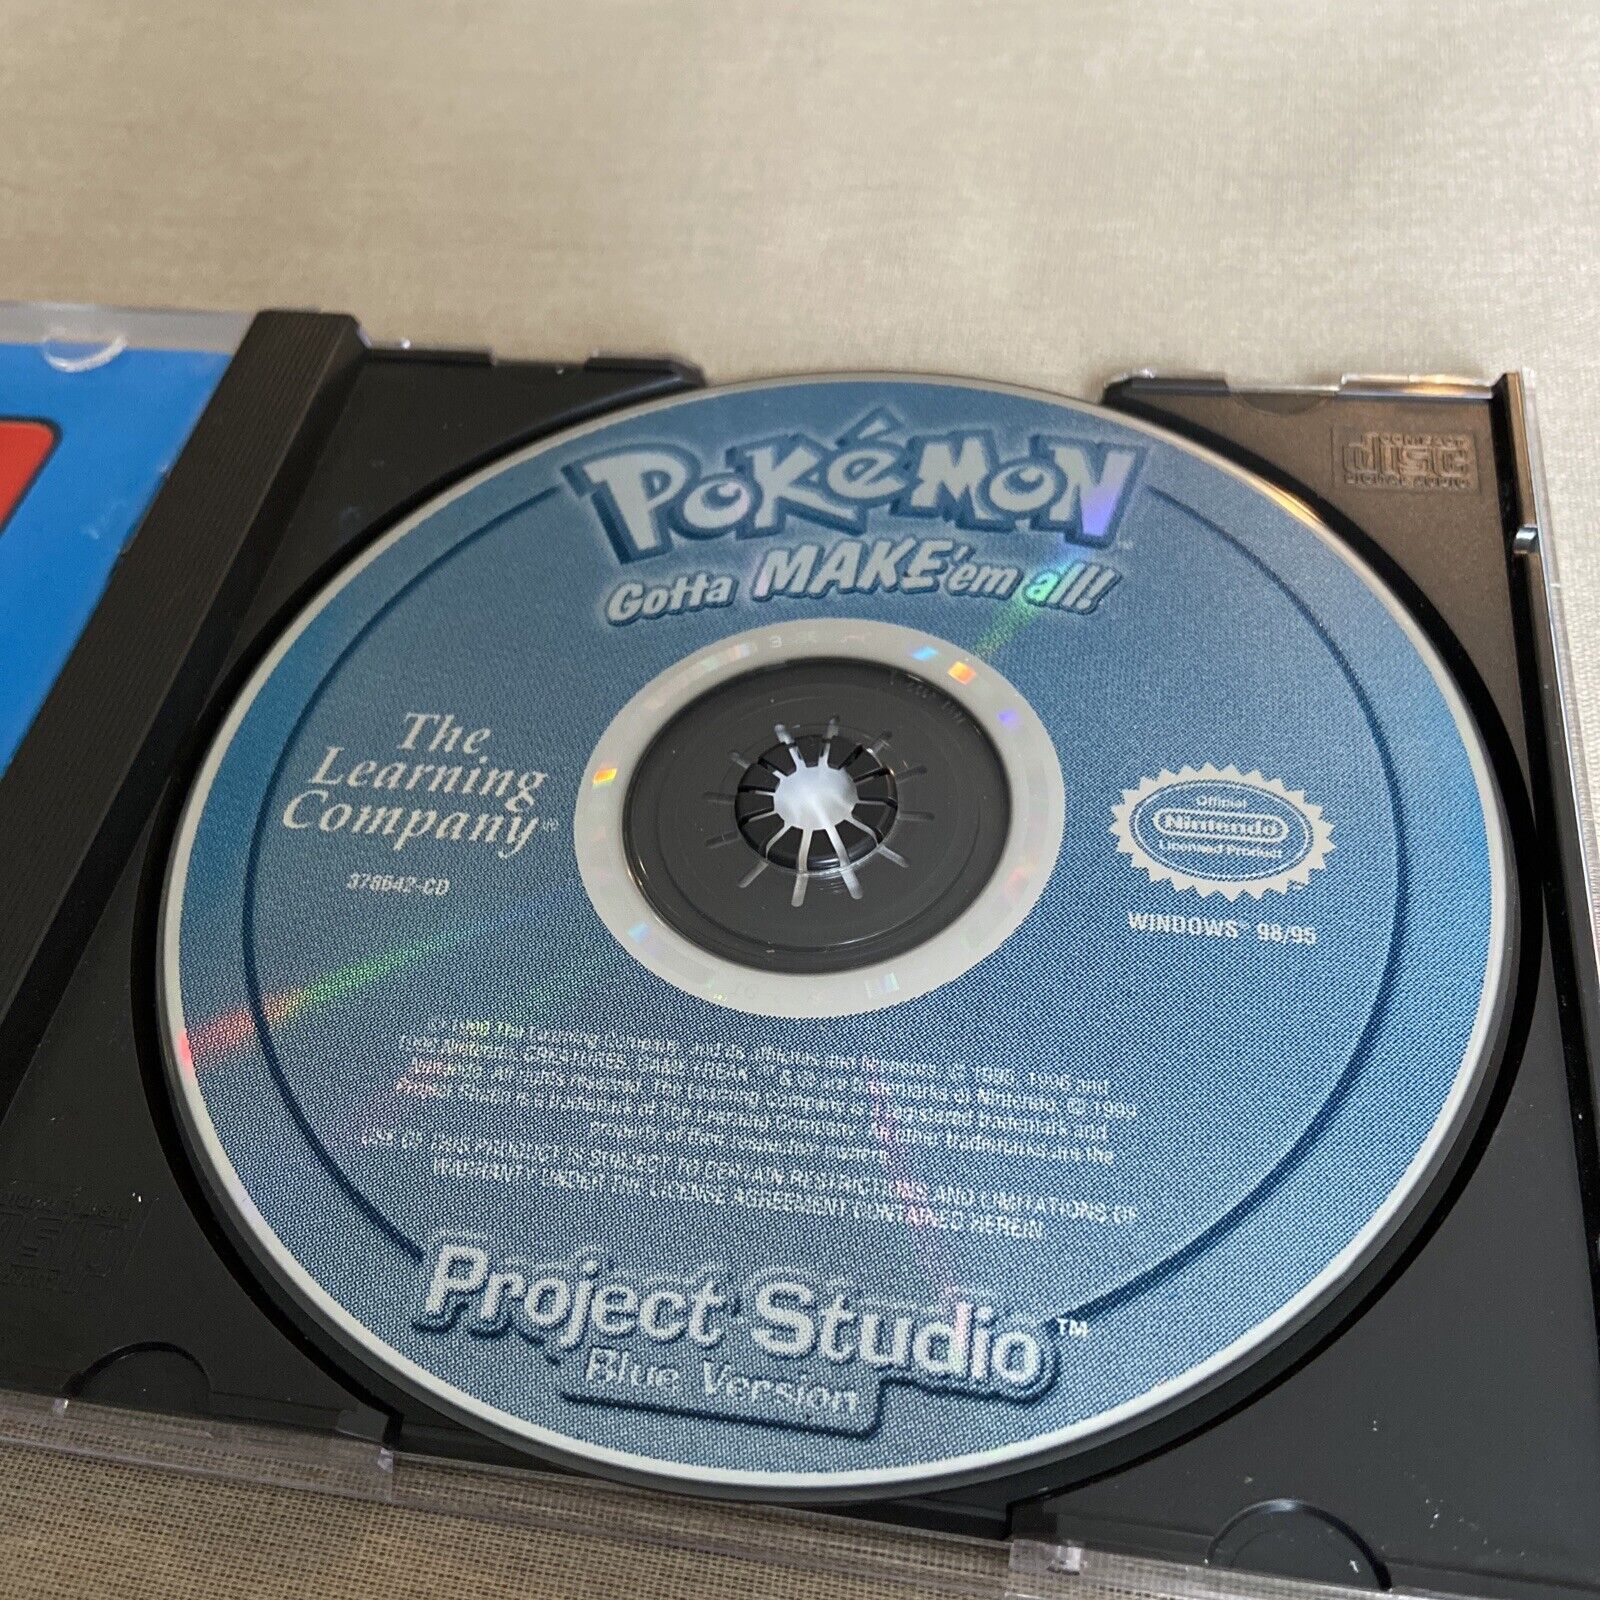 Pokémon Blue Version CD Rom Project Studio Make Lots of Cool Stuff! 1999